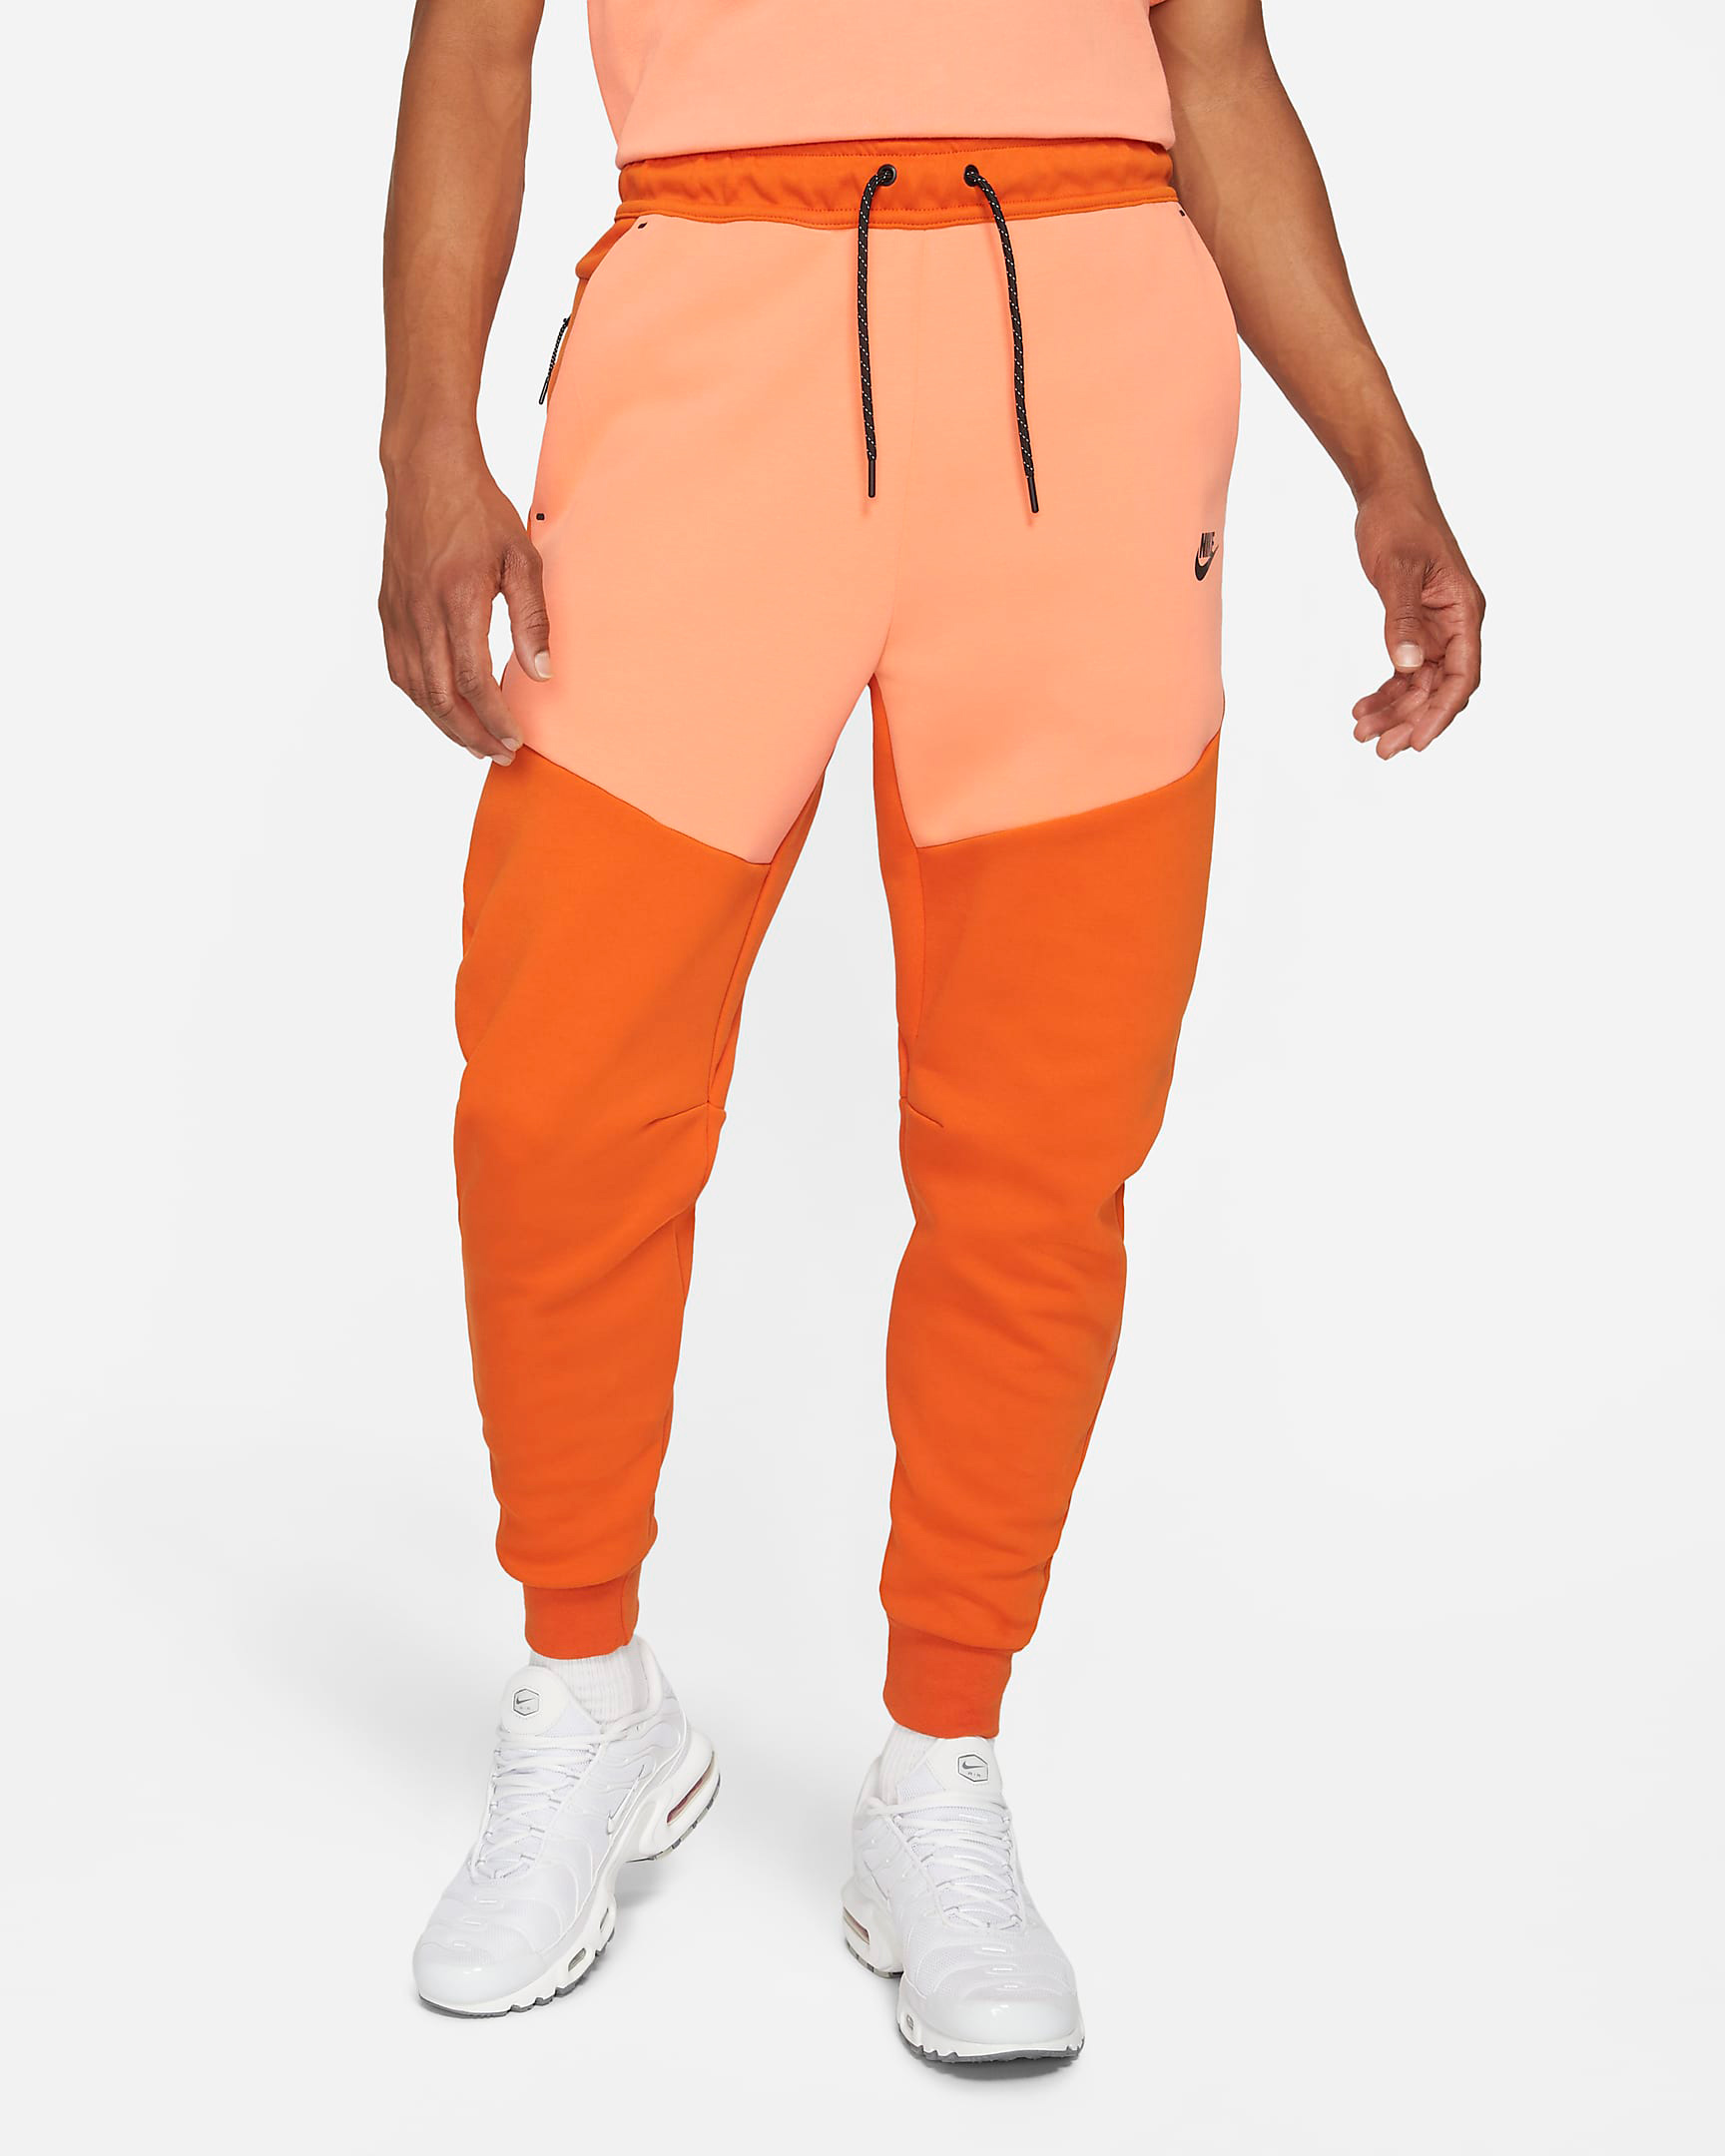 nike-tech-fleece-orange-joggers